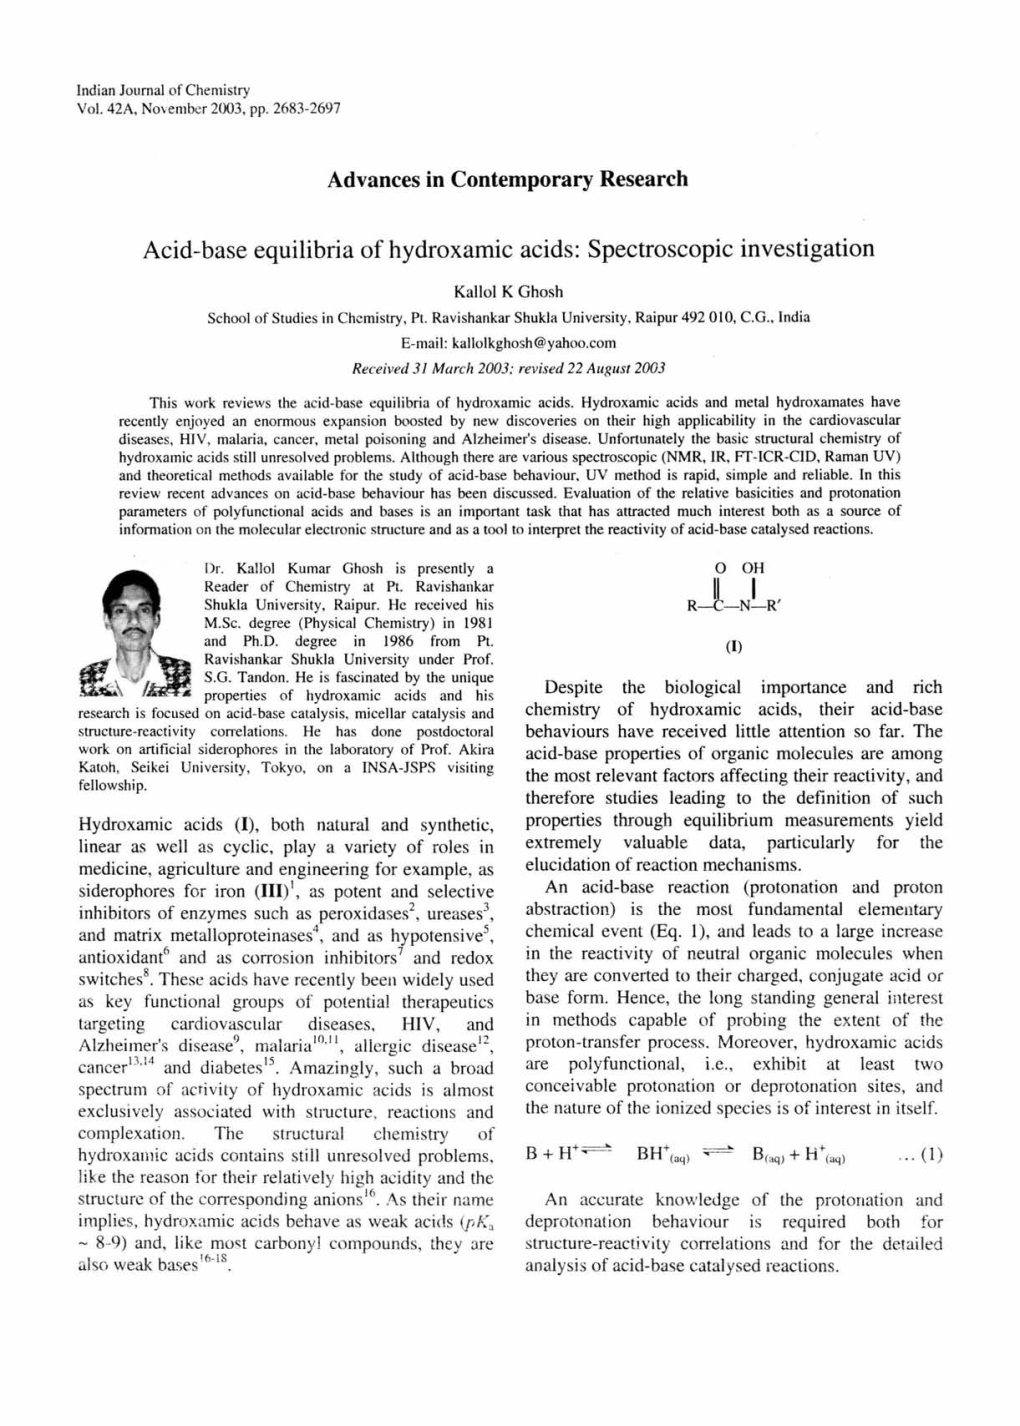 Acid-Base Equilibria of Hydroxamic Acids: Spectroscopic Investigation